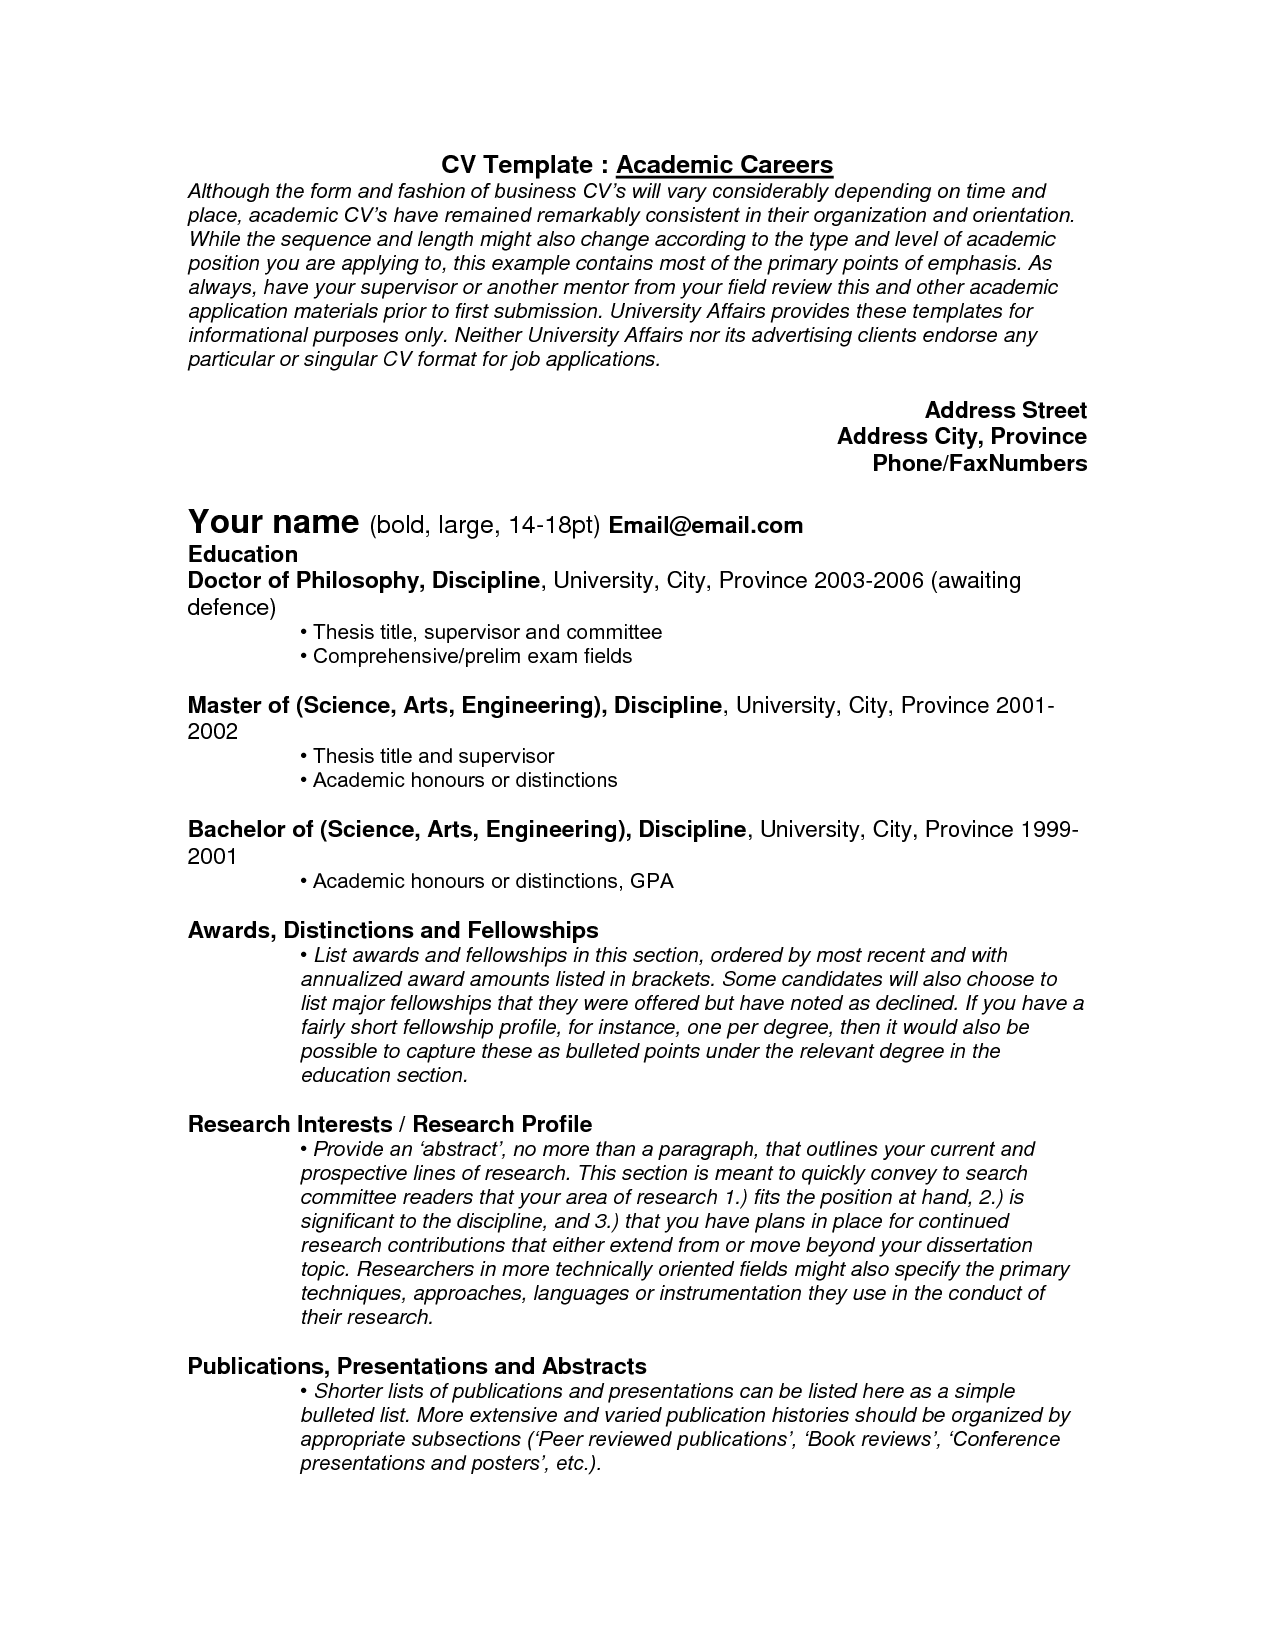 Resume Format Academic 